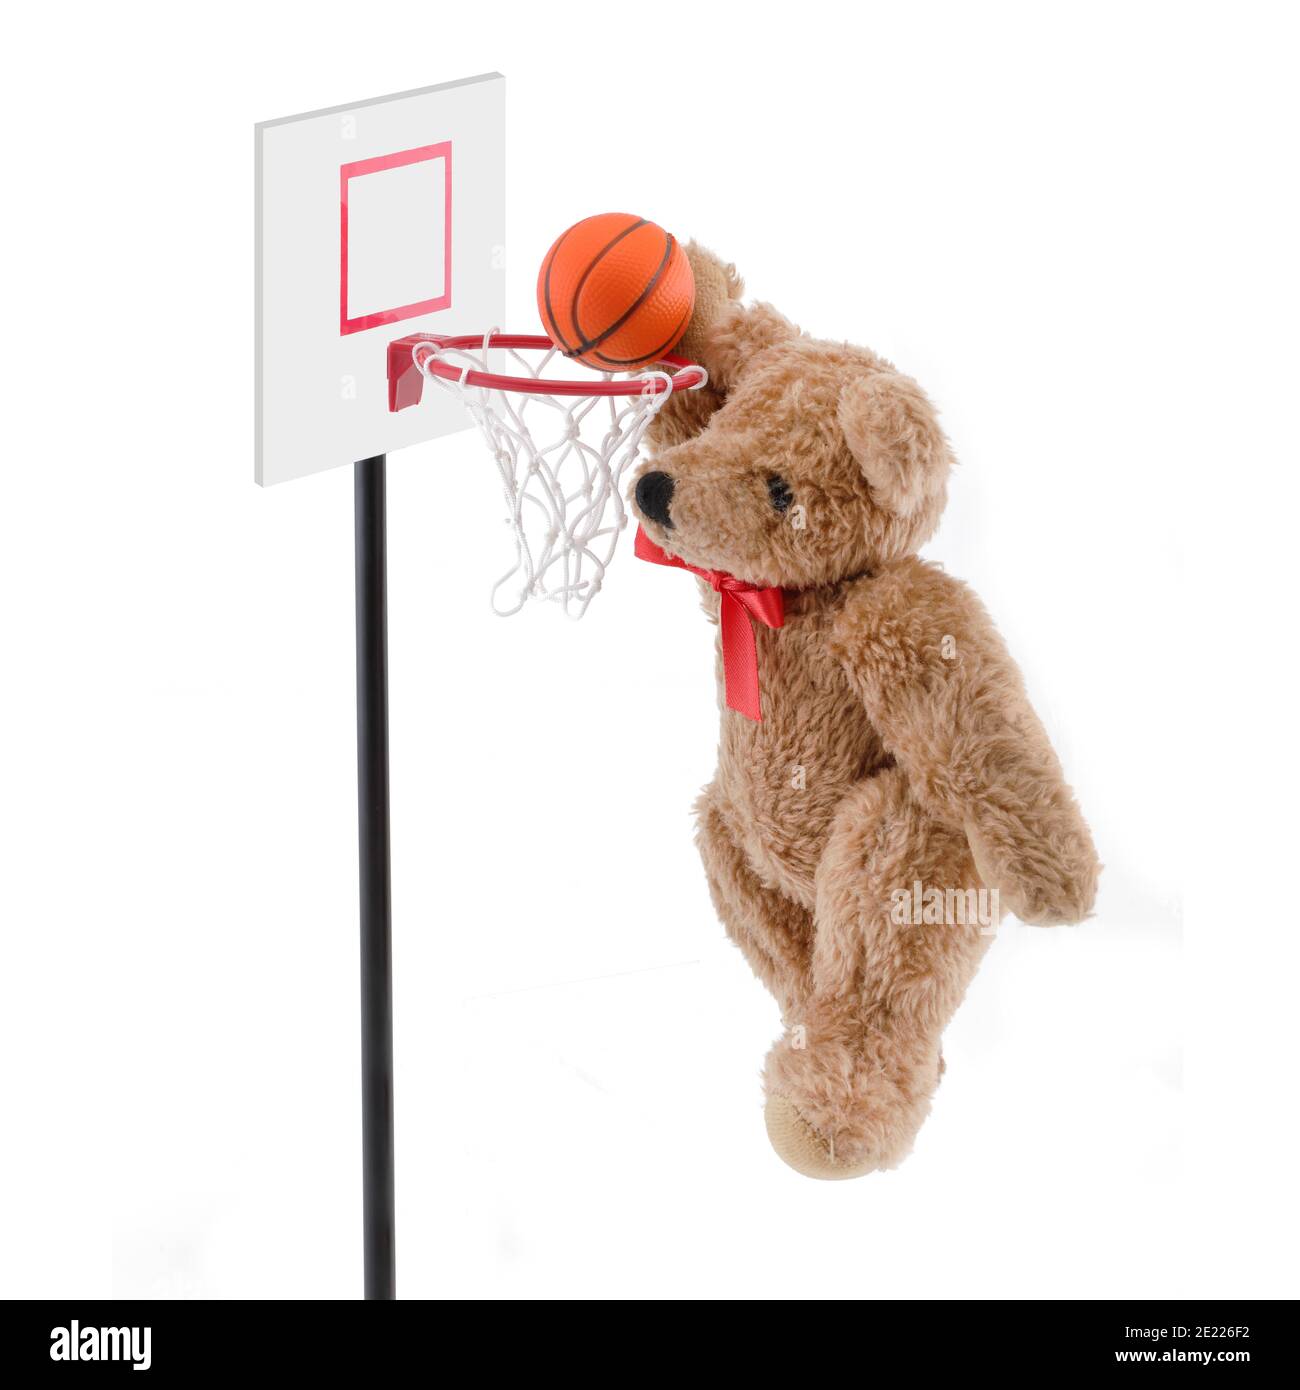 Teddy bear playing basketball dunking the ball Stock Photo